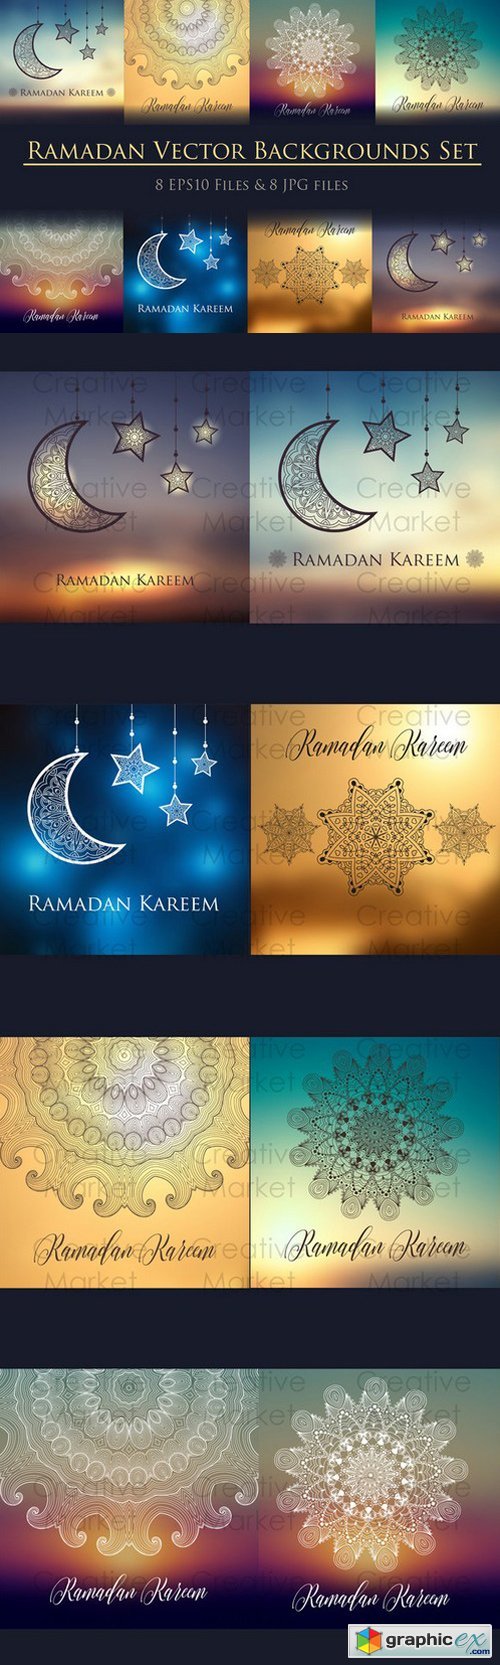 8 Ramadan backgrounds vector set